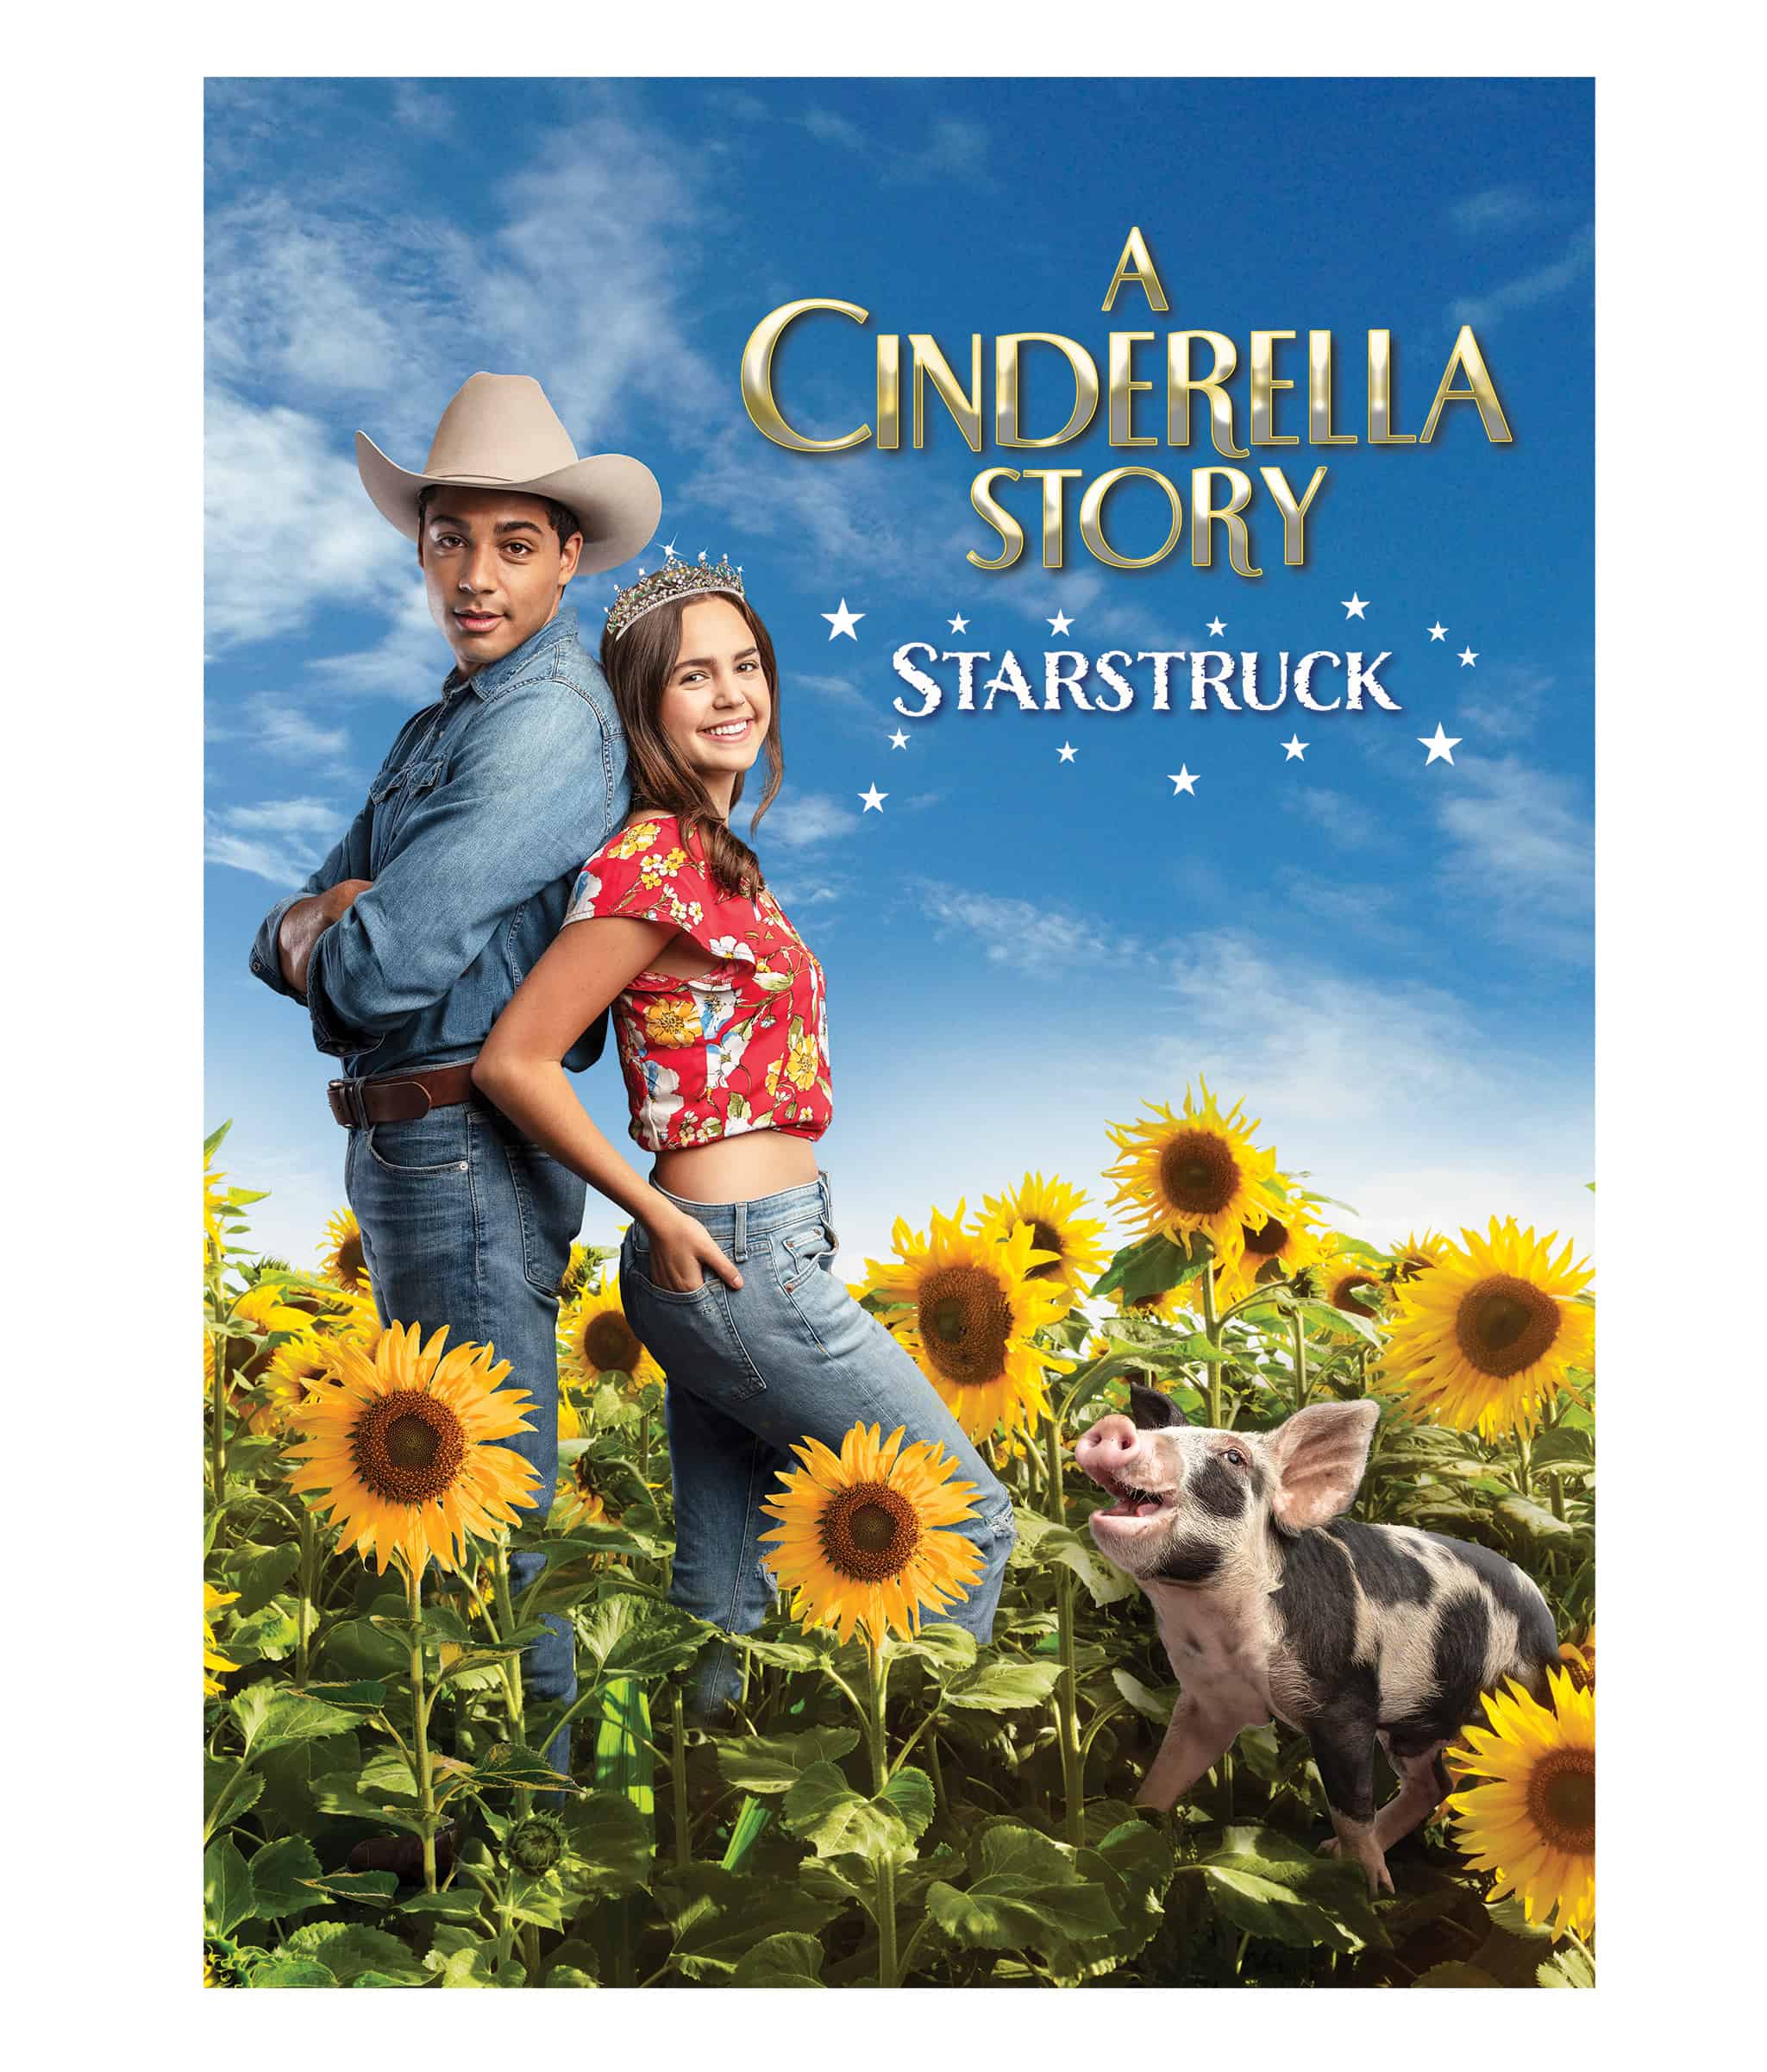 Cinderella Story Starstruck DVD Boxart 2